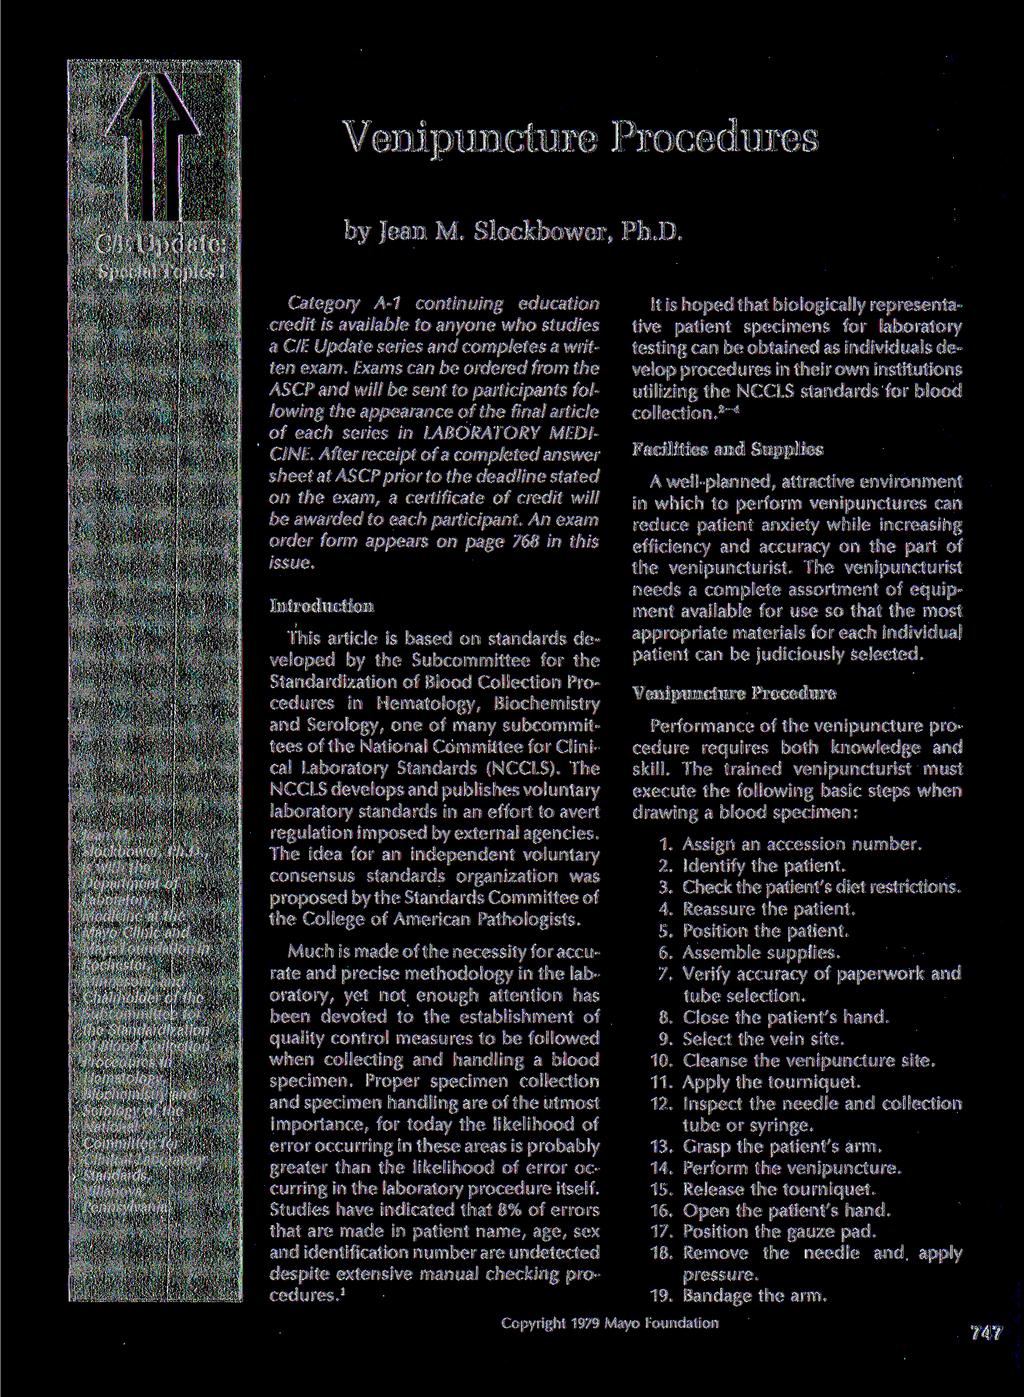 Venipuncture Procedures C/E Update: by Jean M. Slockbower, Ph.D.